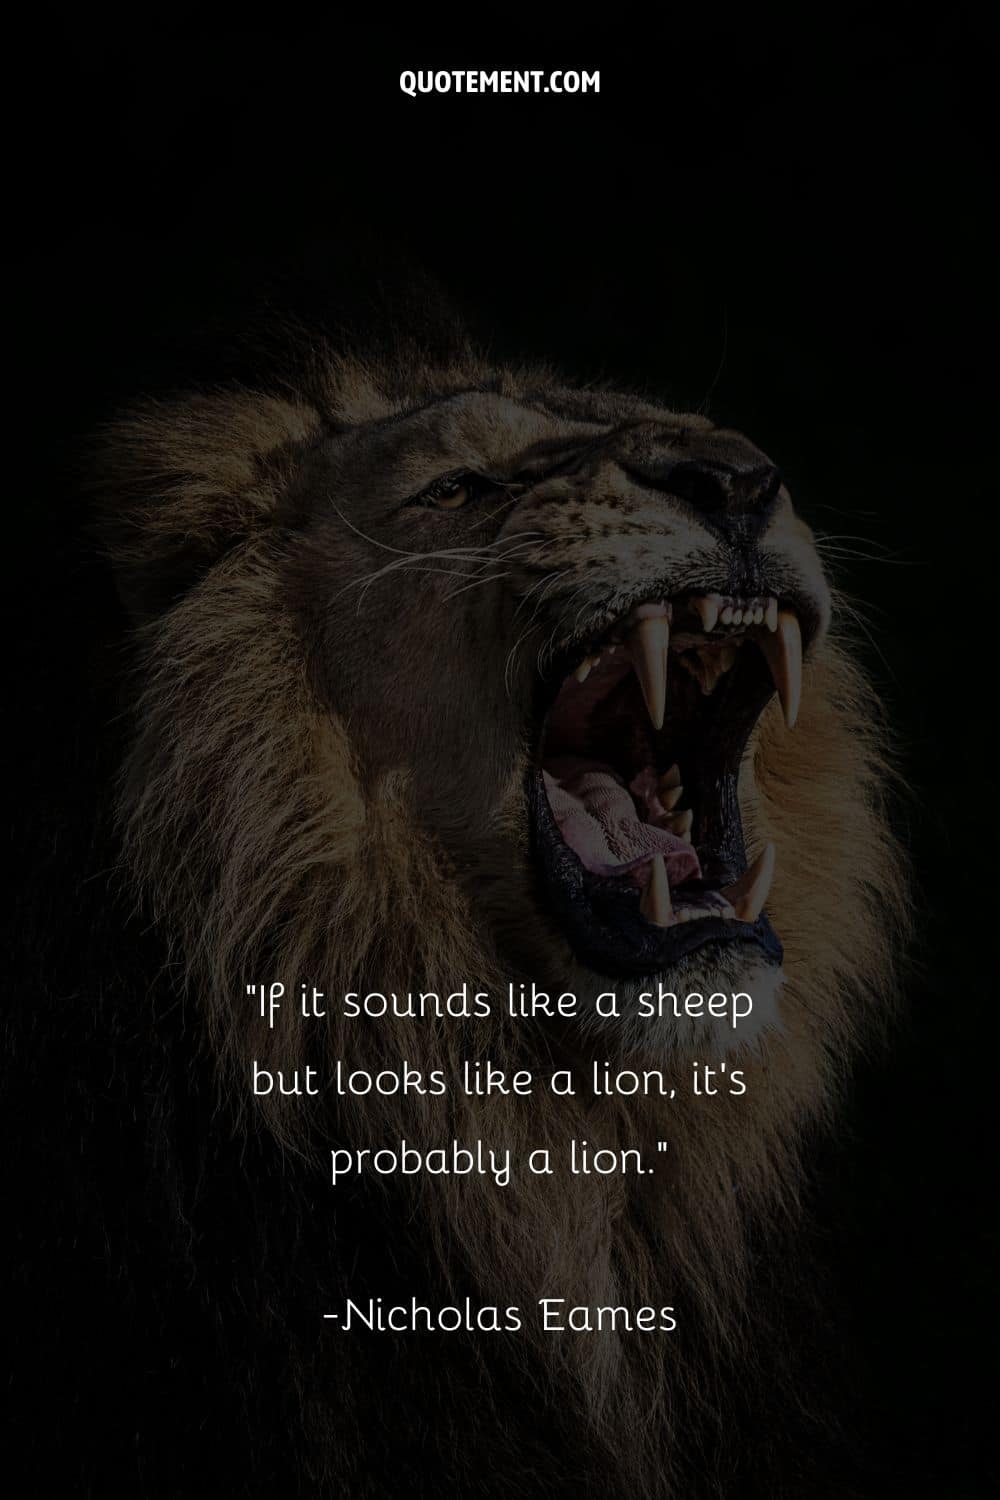 If it sounds like a sheep but looks like a lion, it’s probably a lion